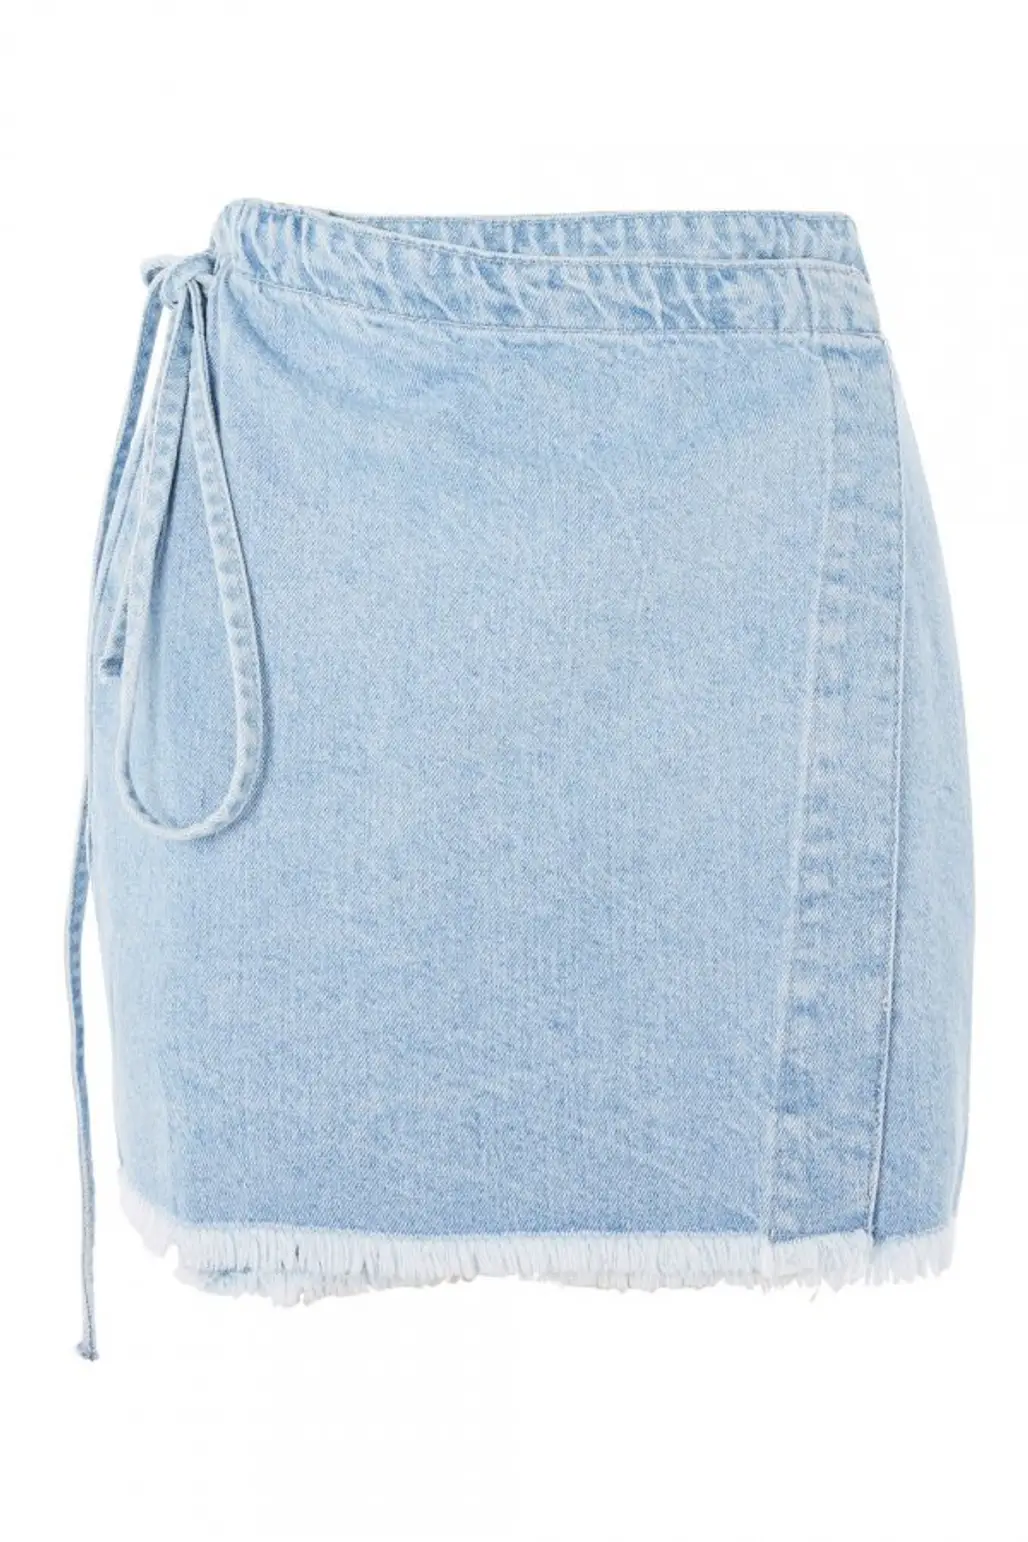 blue, denim, product, pocket, active shorts,